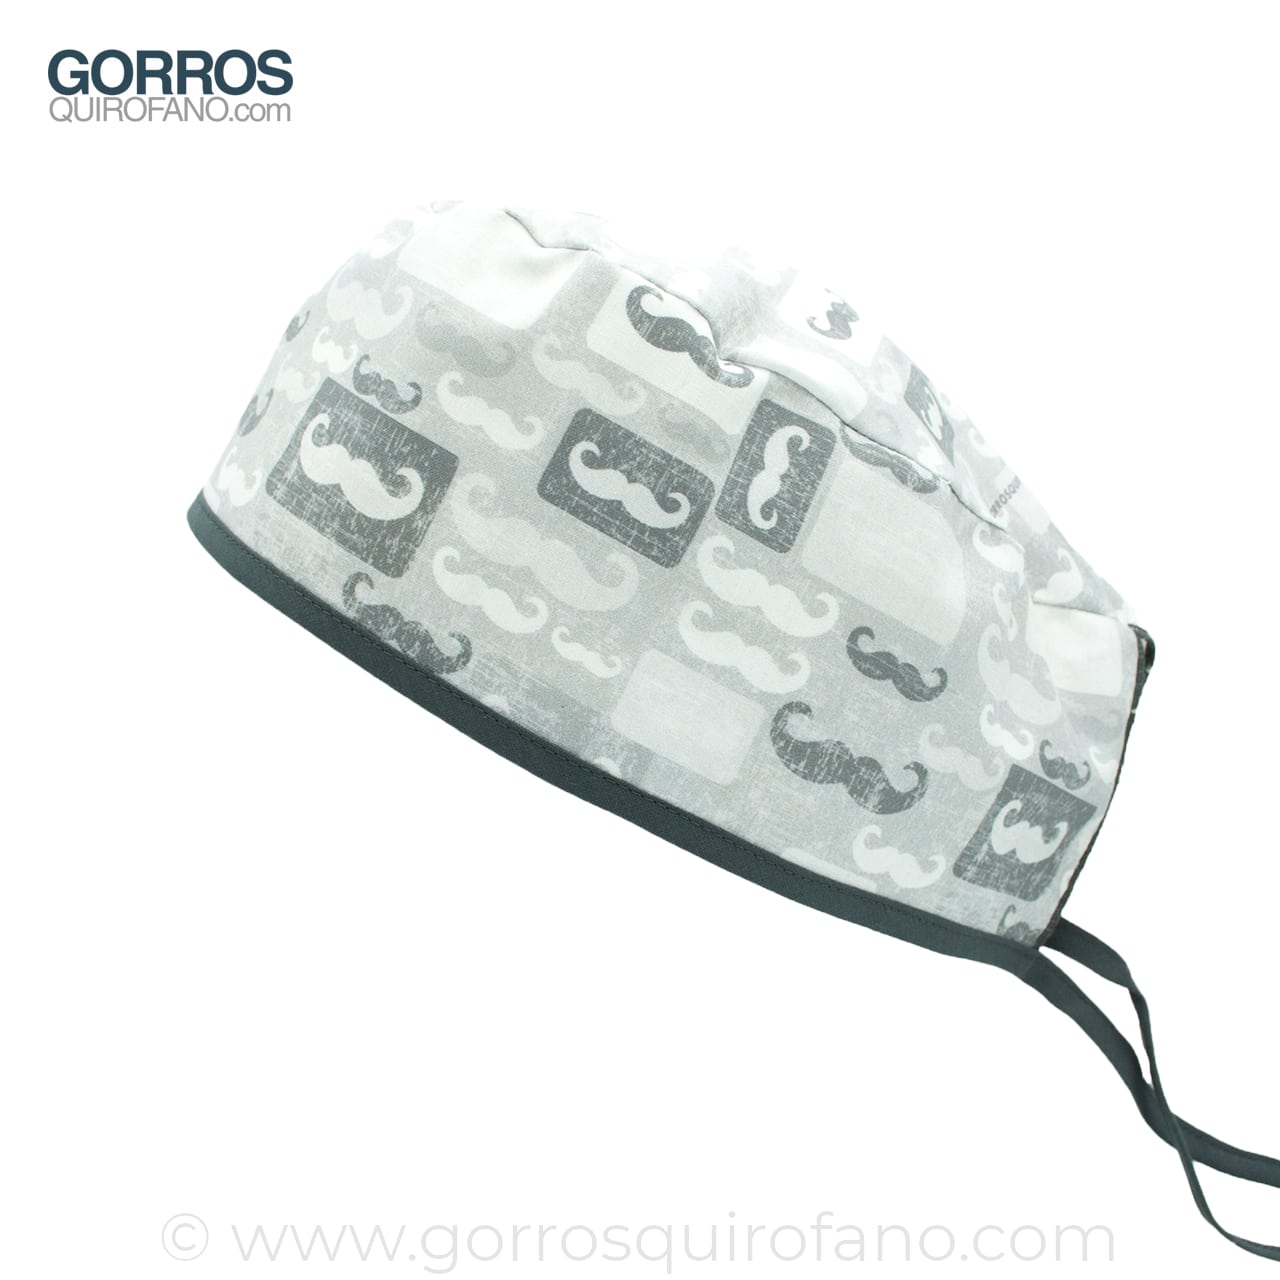 Gorros Quirofano Bigotes Grises - 937